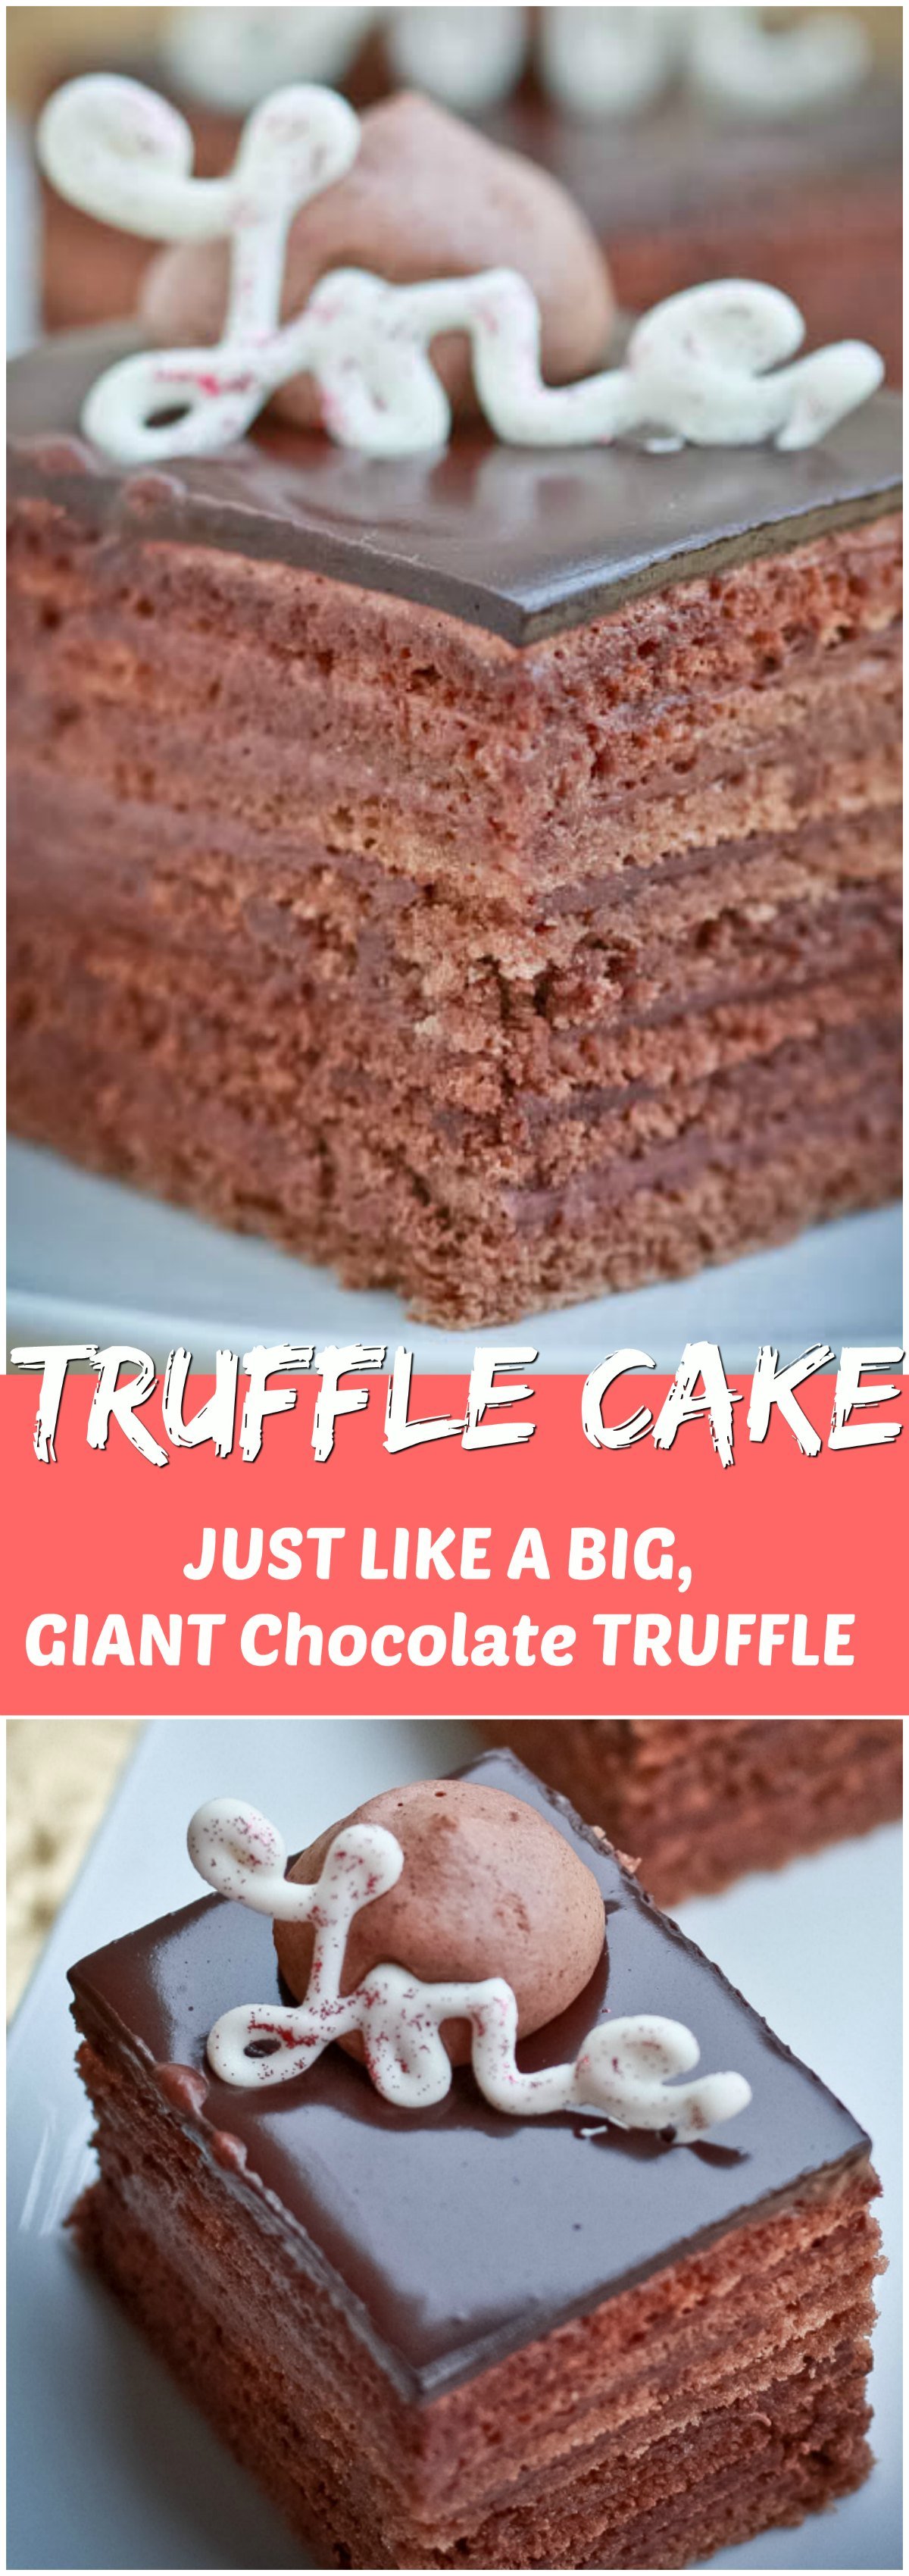 Truffle Cake Recipe - Let the Baking Begin!